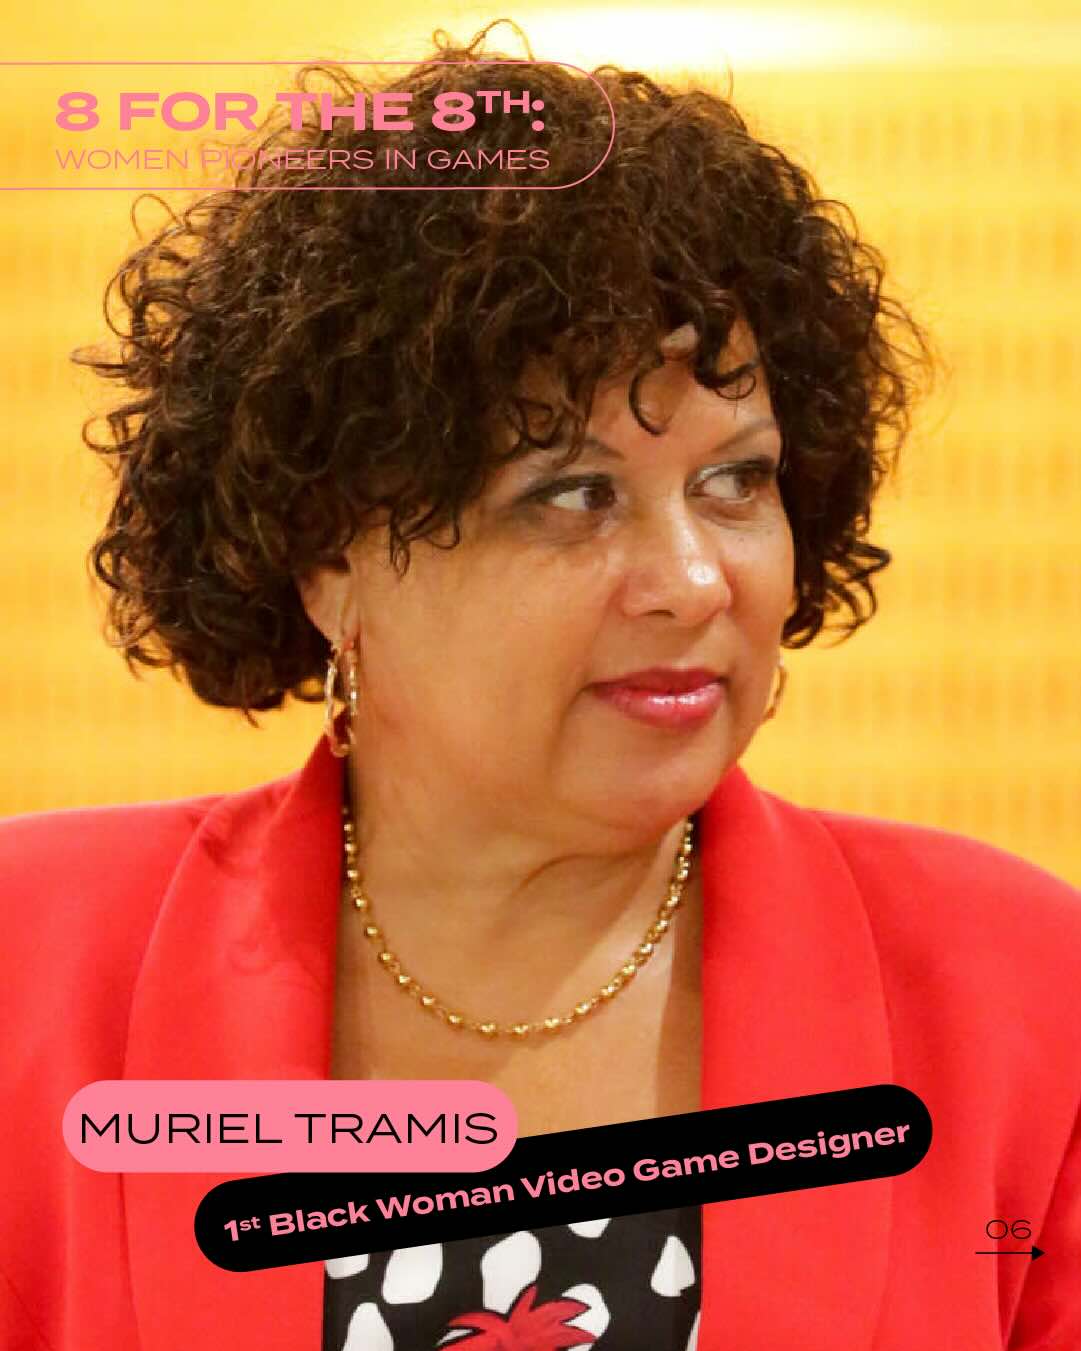 Muriel Tramis, First Black Woman Video Game Designer